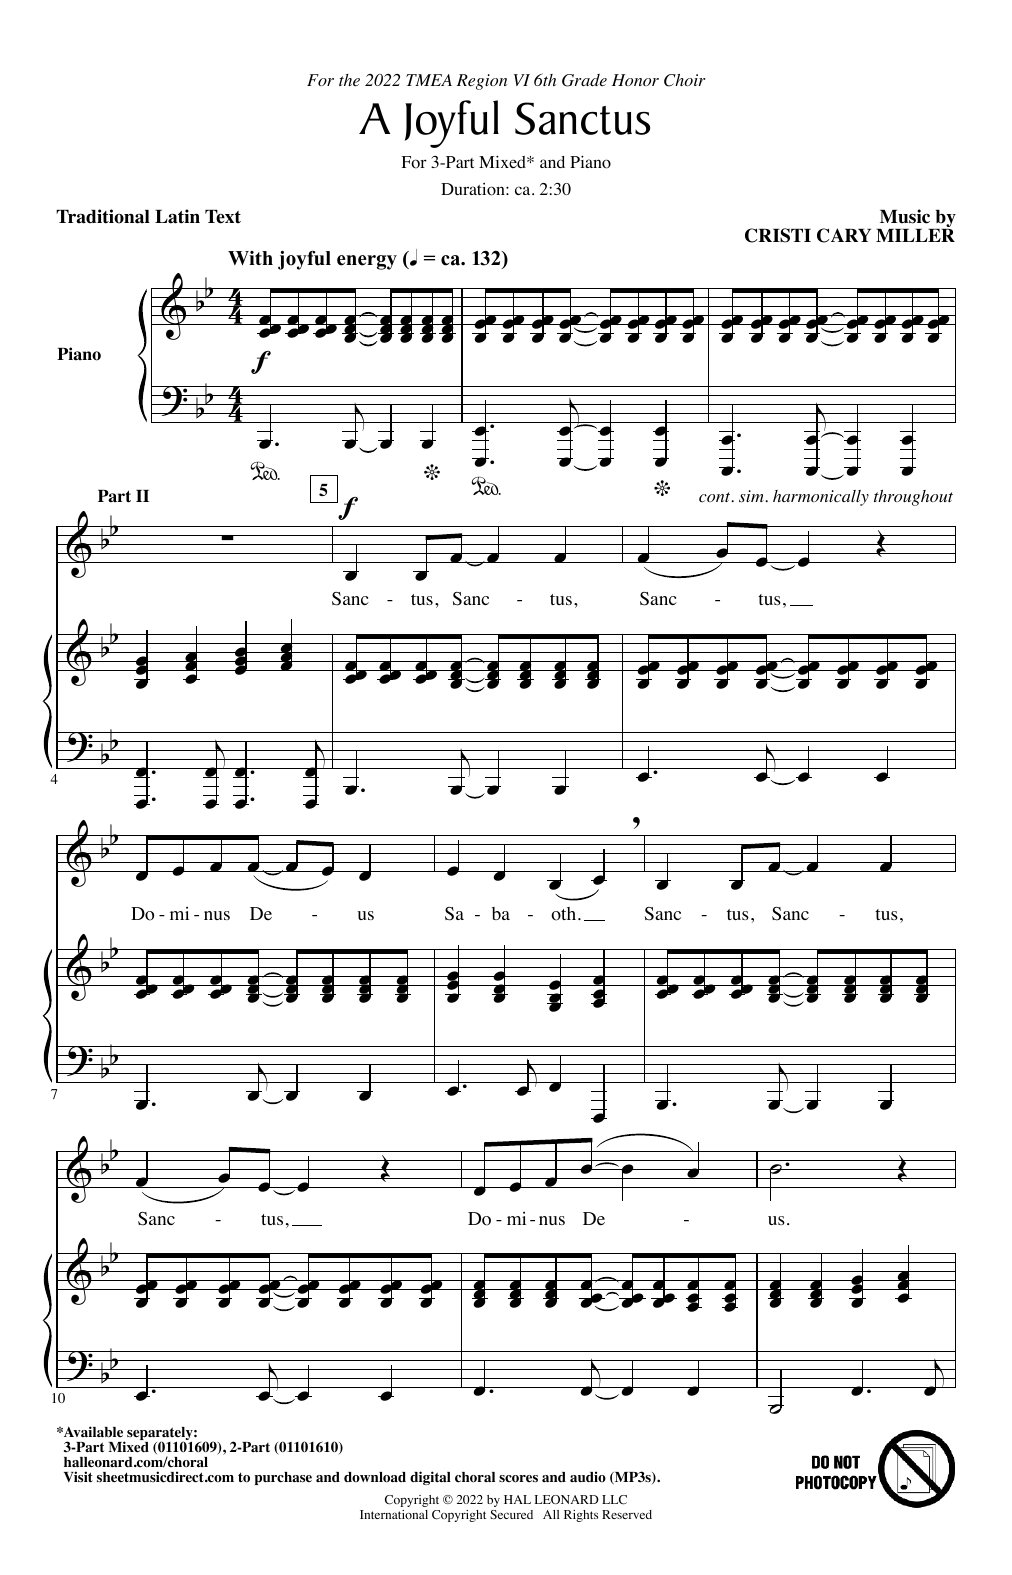 Cristi Cary Miller A Joyful Sanctus Sheet Music Notes & Chords for 3-Part Mixed Choir - Download or Print PDF